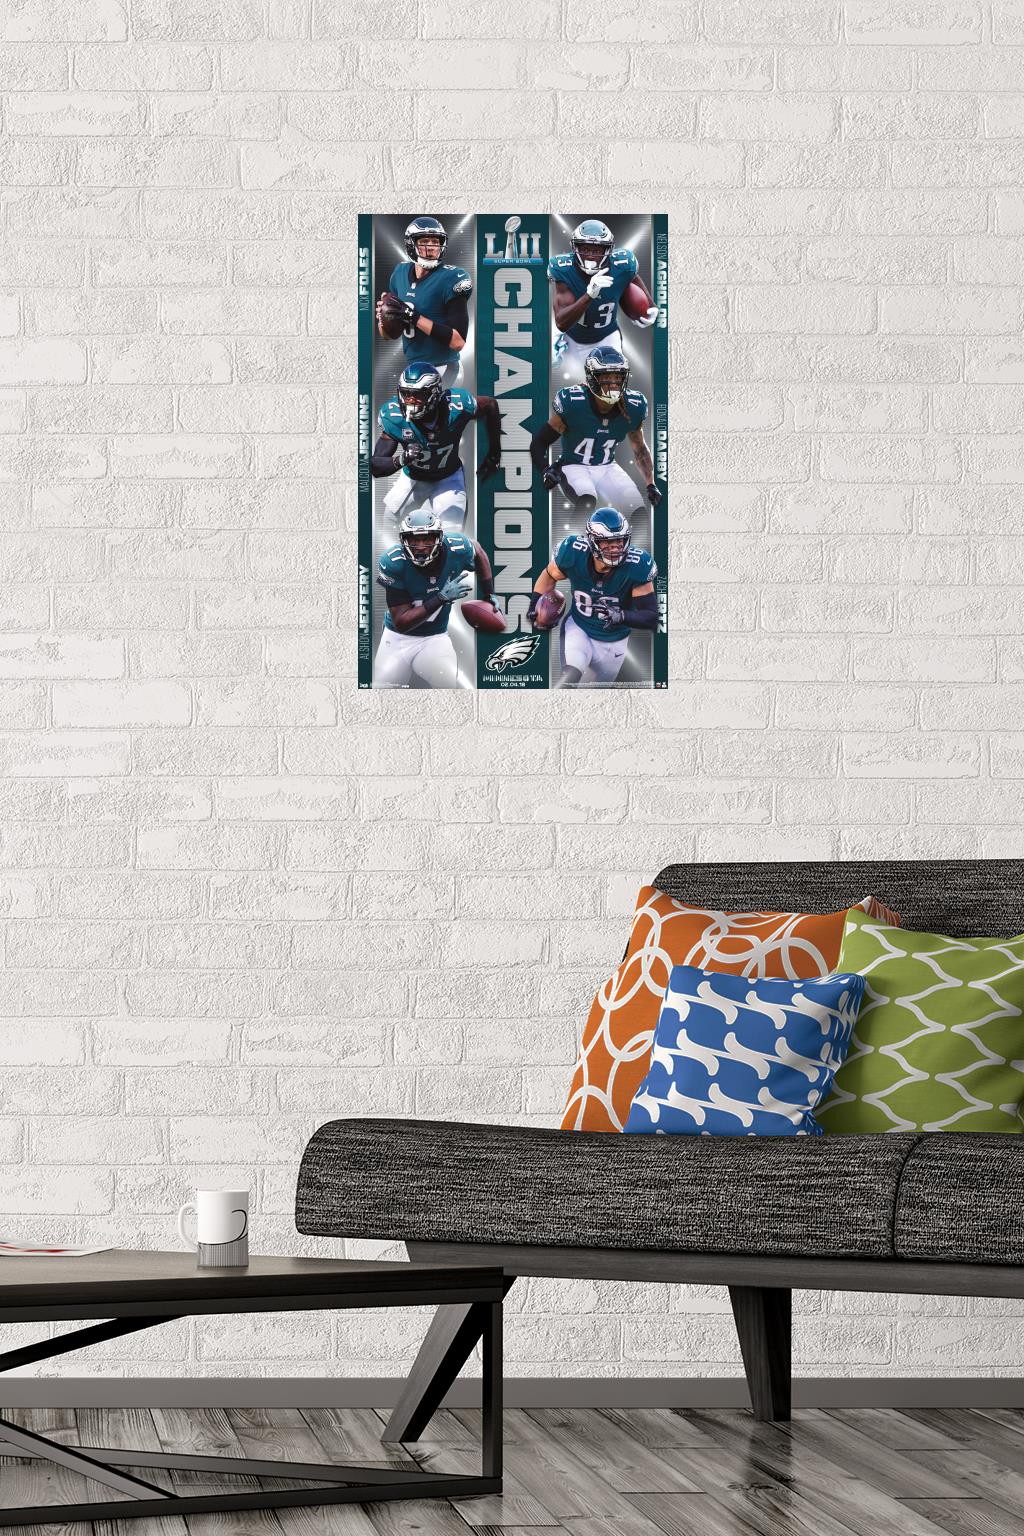 Trends International NFL Philadelphia Eagles - Commemorative Super Bowl LII - Champions Wall Poster 14.725" x 22.375" Premium Poster & Mount Bundle - image 2 of 5